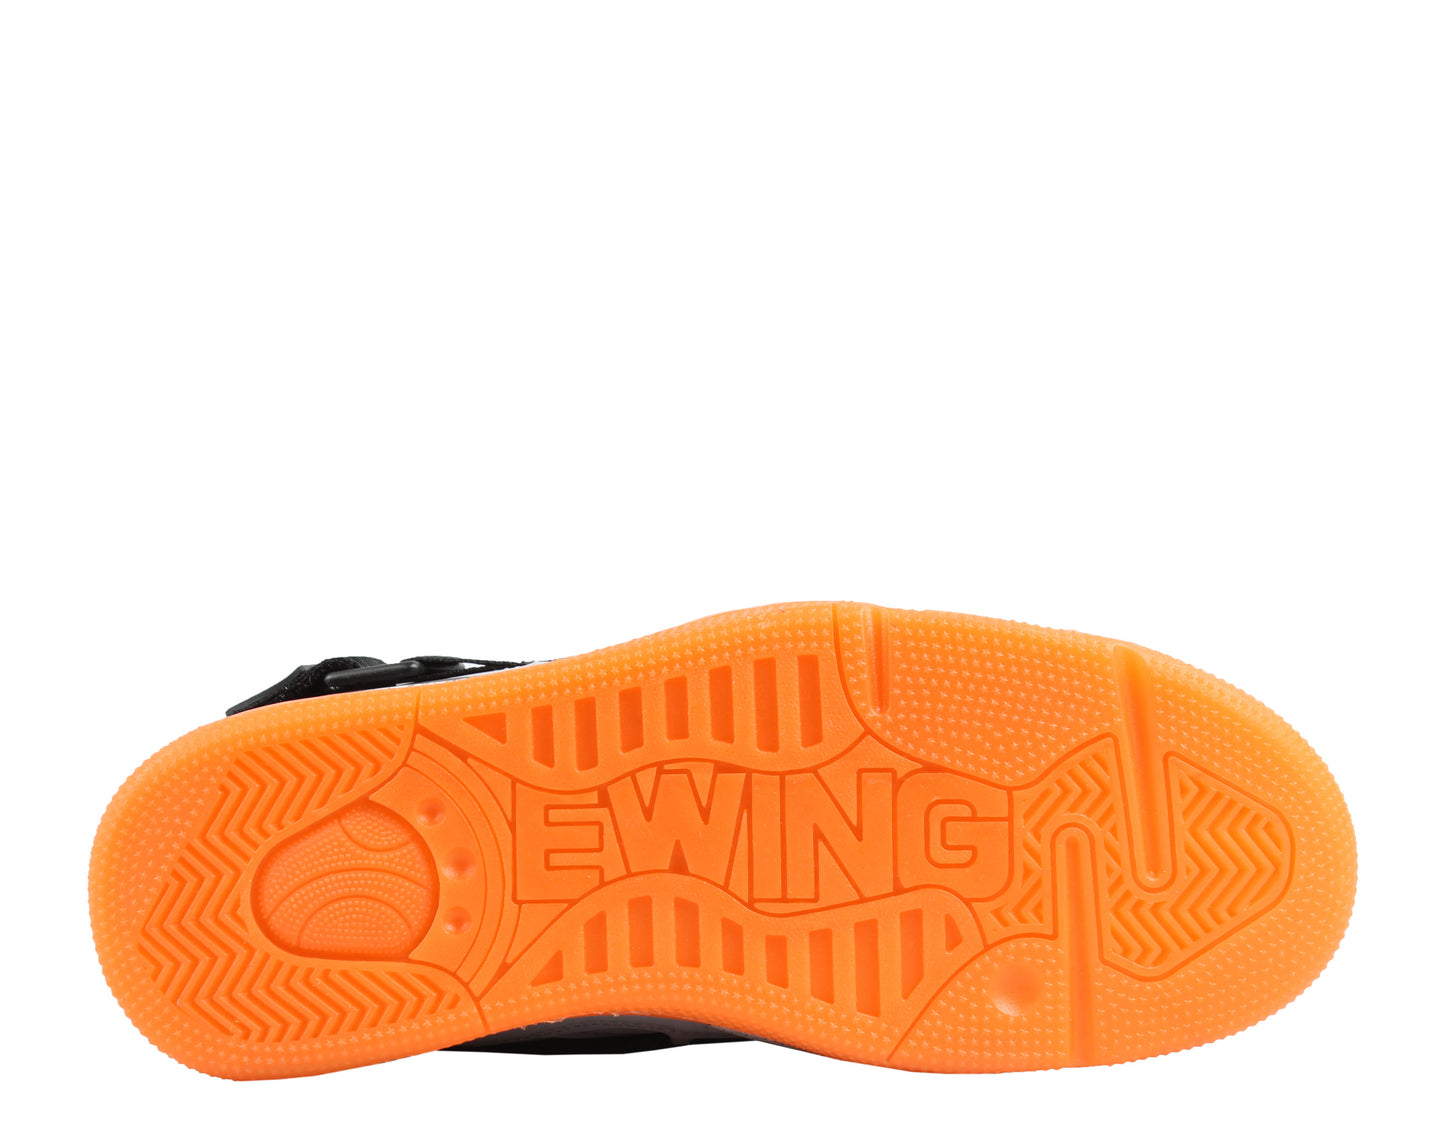 Ewing Athletics Ewing Concept Grey/Orange Men's Basketball Shoes 1BM00563-065